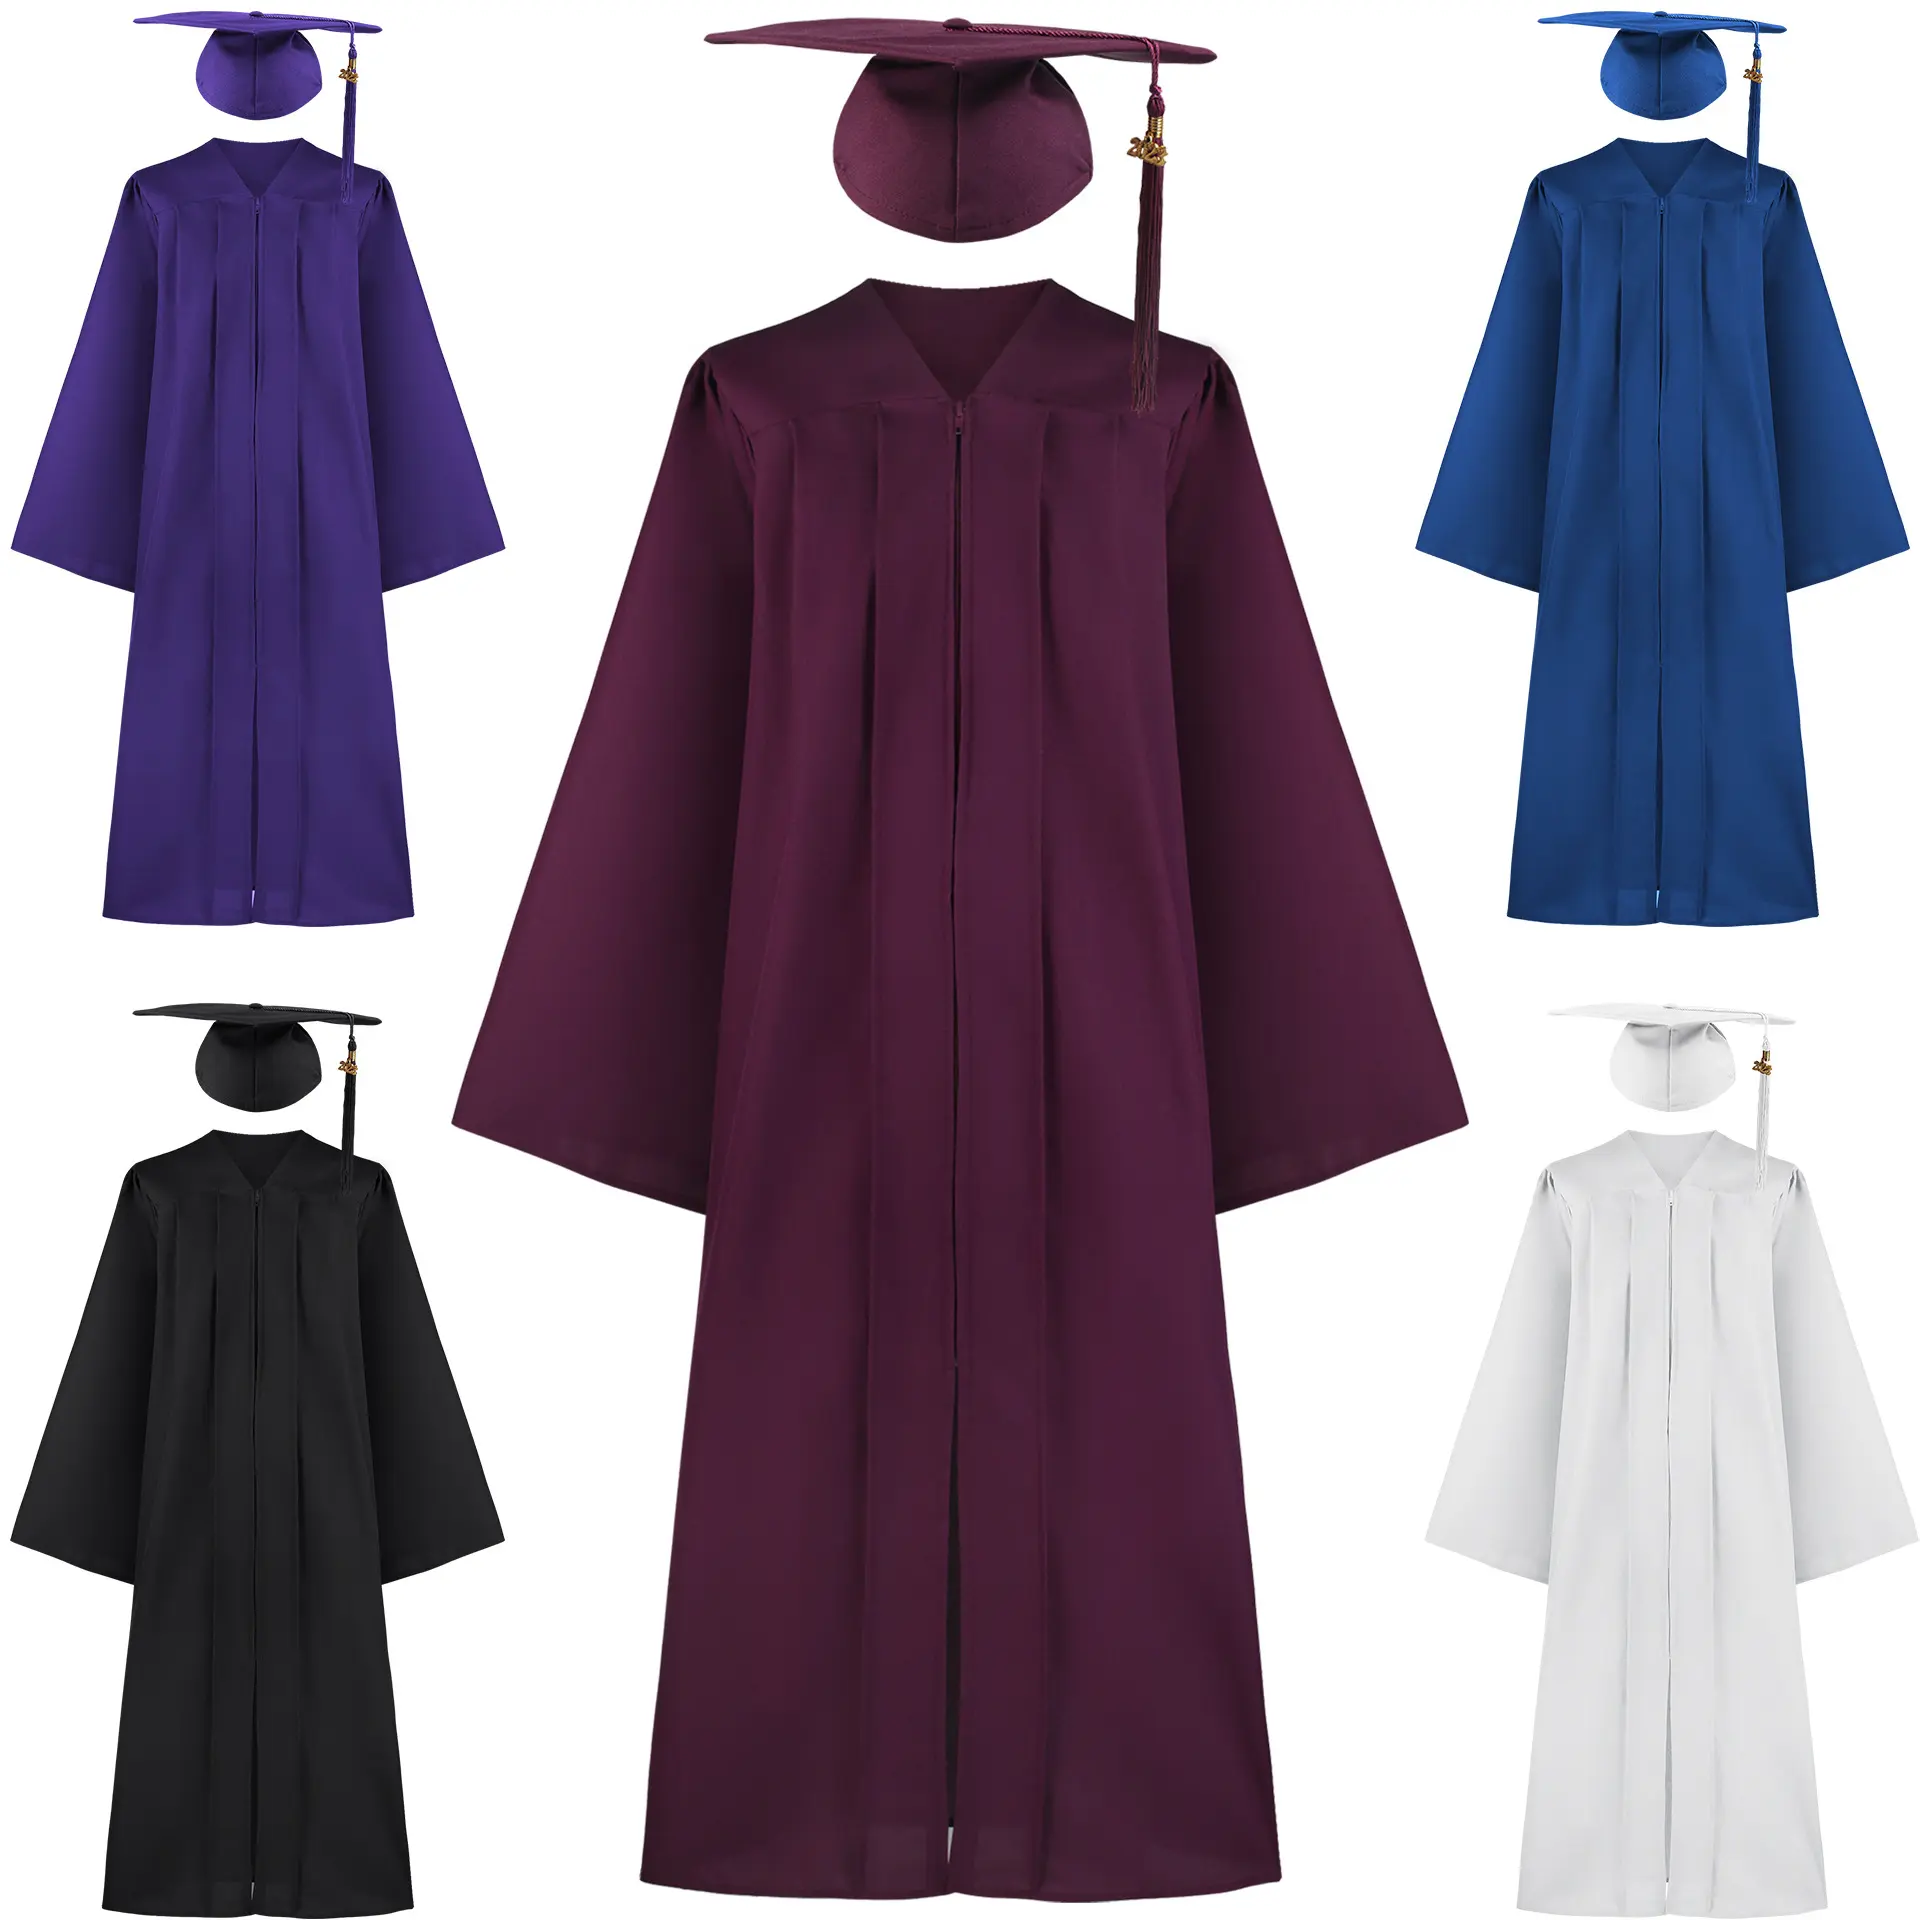 Bachelor's dress Adult graduation dress European and American high school college costume cosplay performance costume